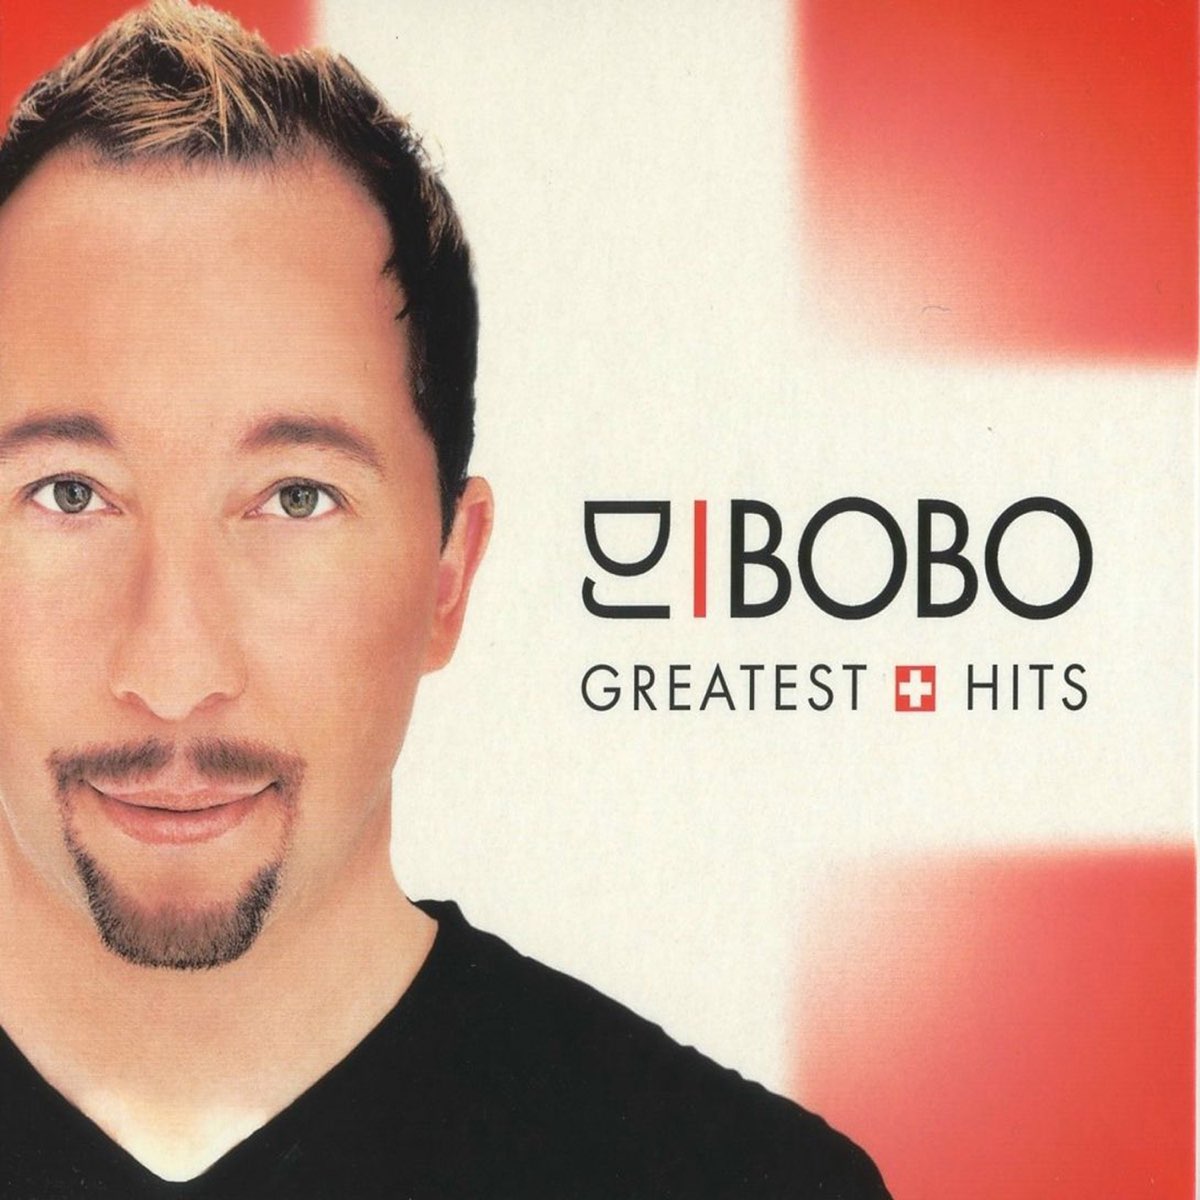 Бобо бобо песня слушать. DJ Bobo обложка. DJ Bobo "Greatest Hits". DJ Bobo Постер. Дж бобо фото.